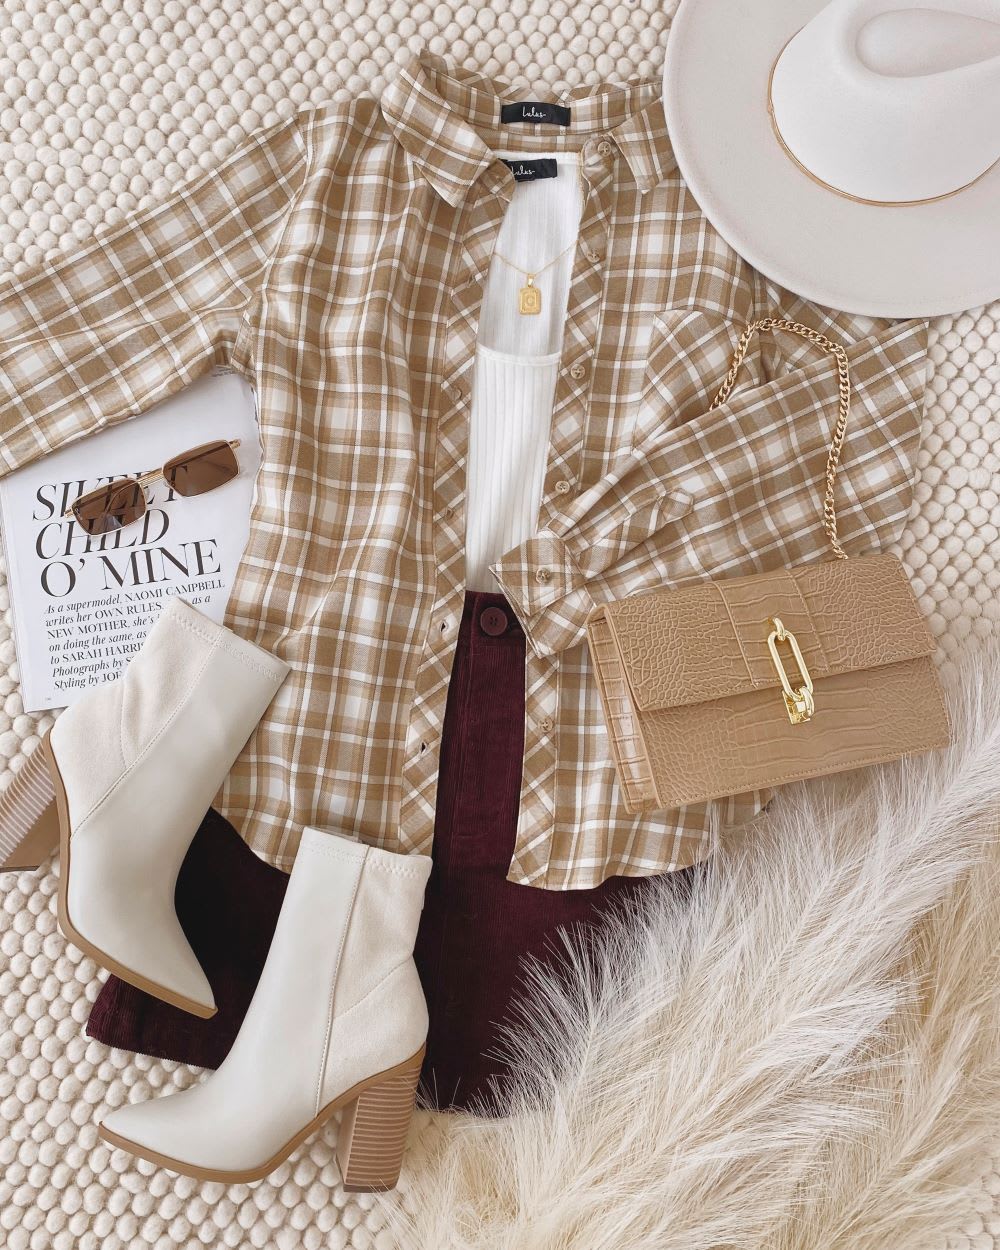 Fall Capsule Wardrobe: 16 Cute Outfits -  Fashion Blog